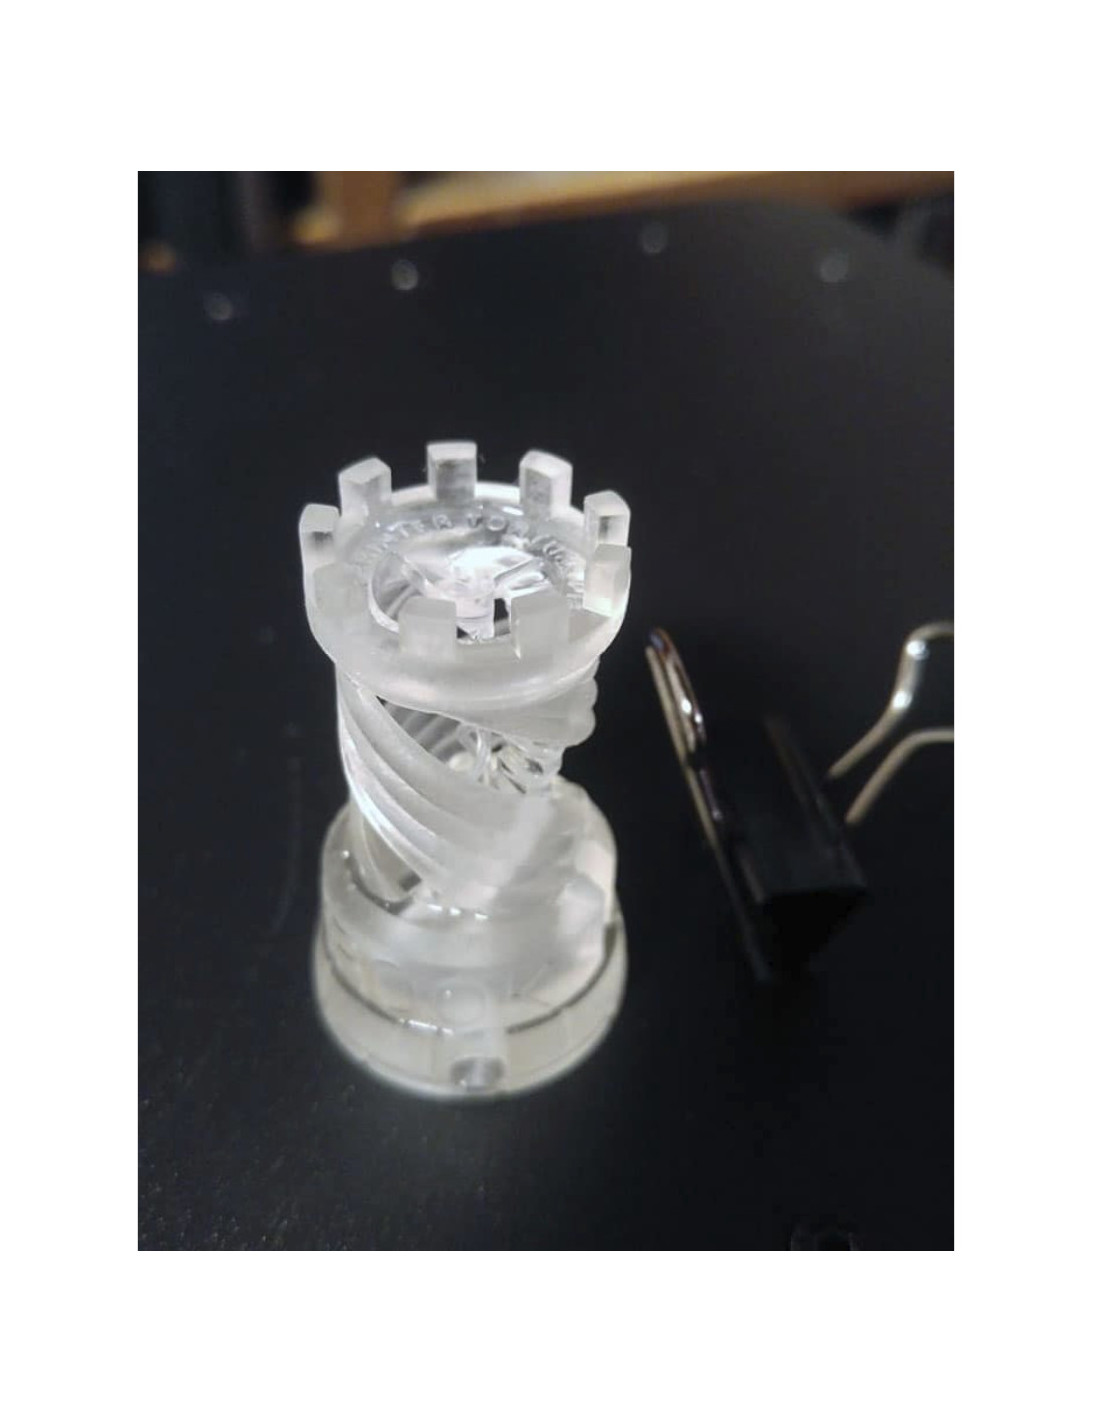 Resina para impresora 3D SLA|DLP Monocure3D (1000ml) - Transparente